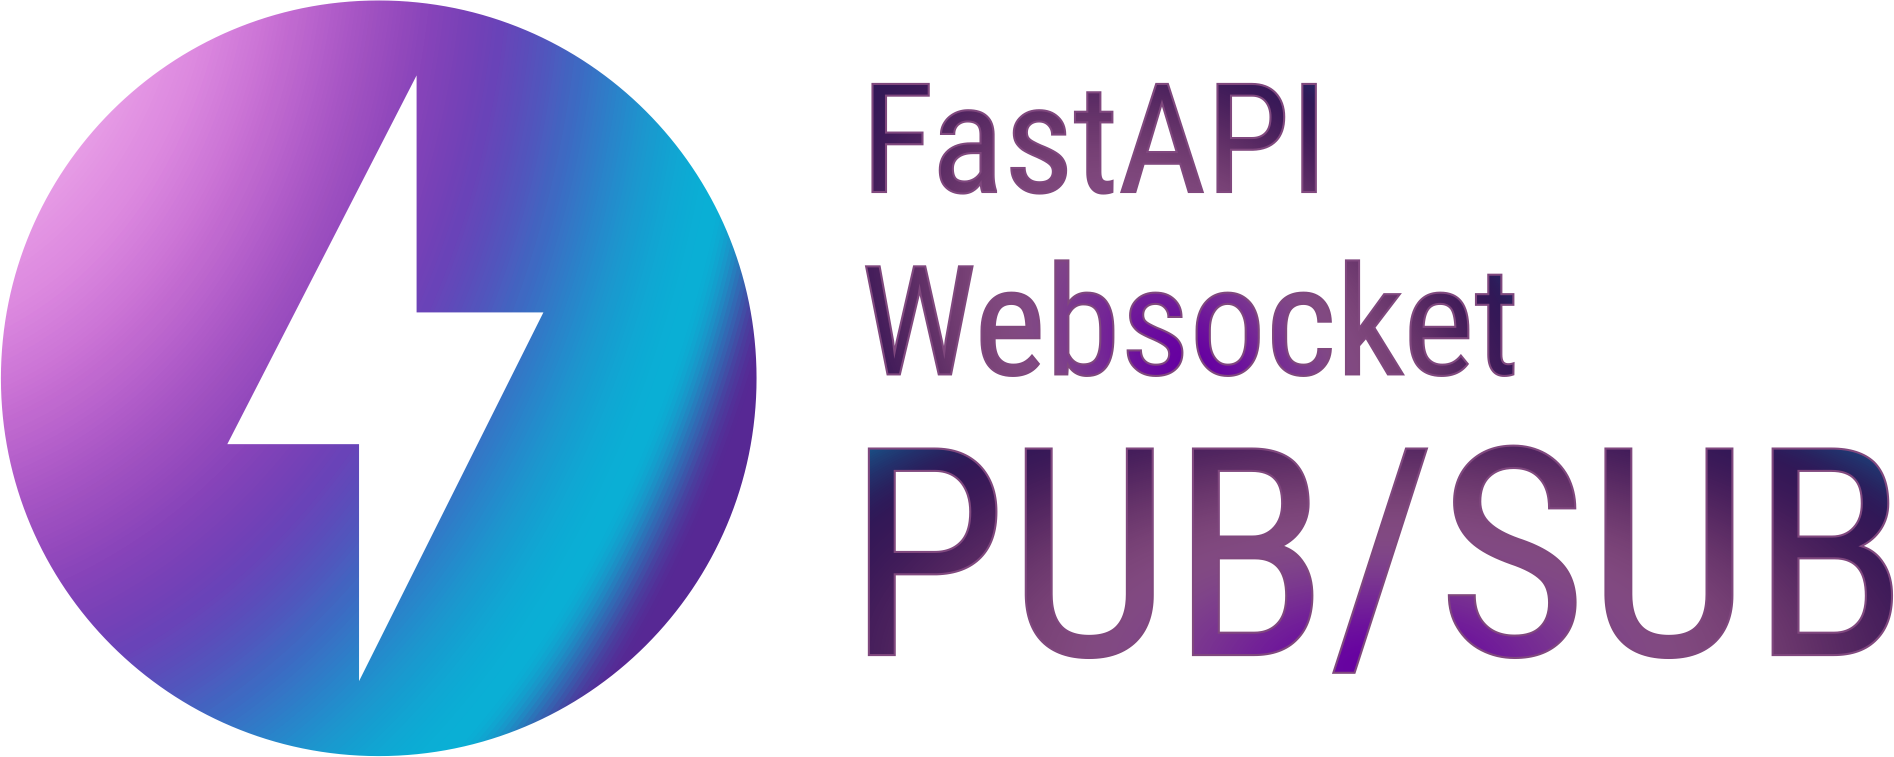 fastapi_websocket_pubsub